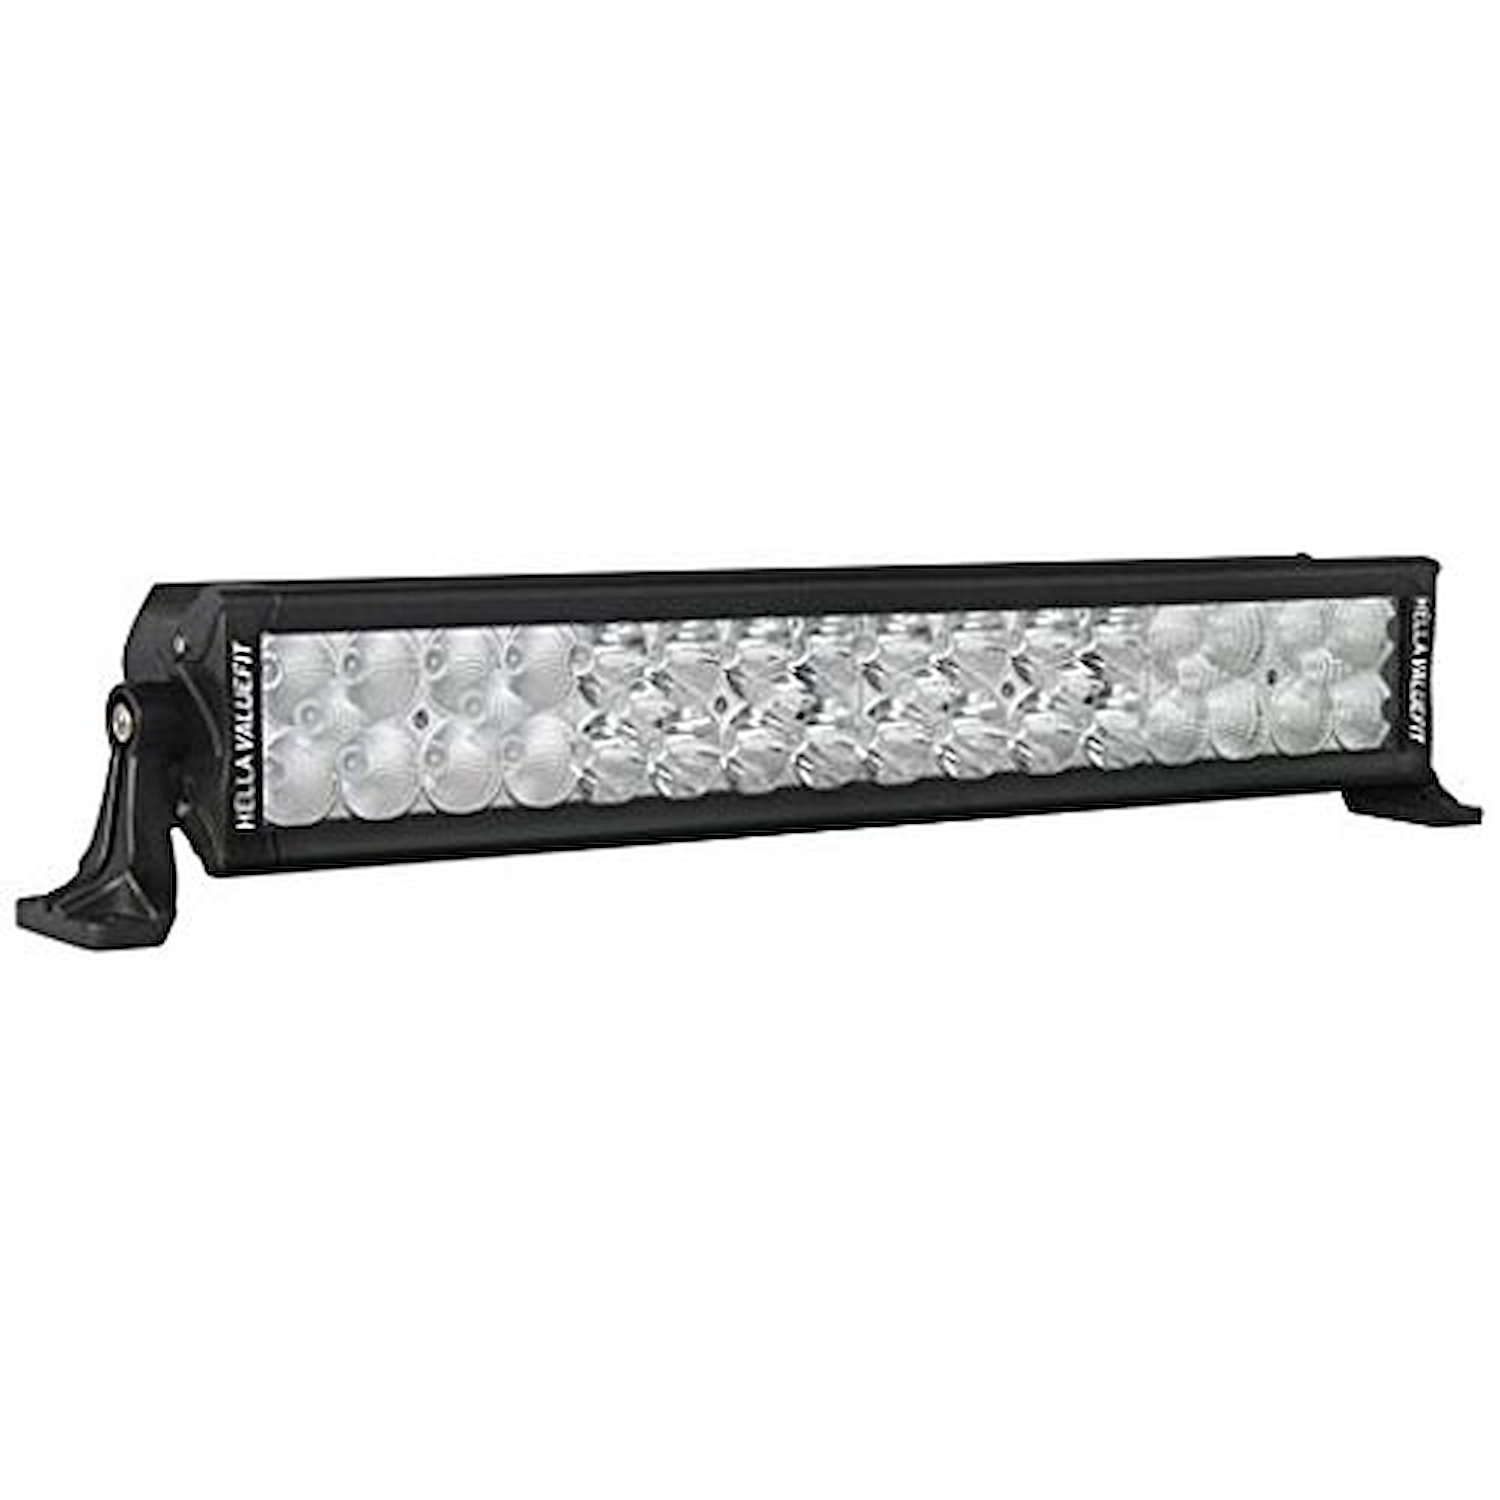 ValueFit Pro 40 LED Light Bar 21" Length